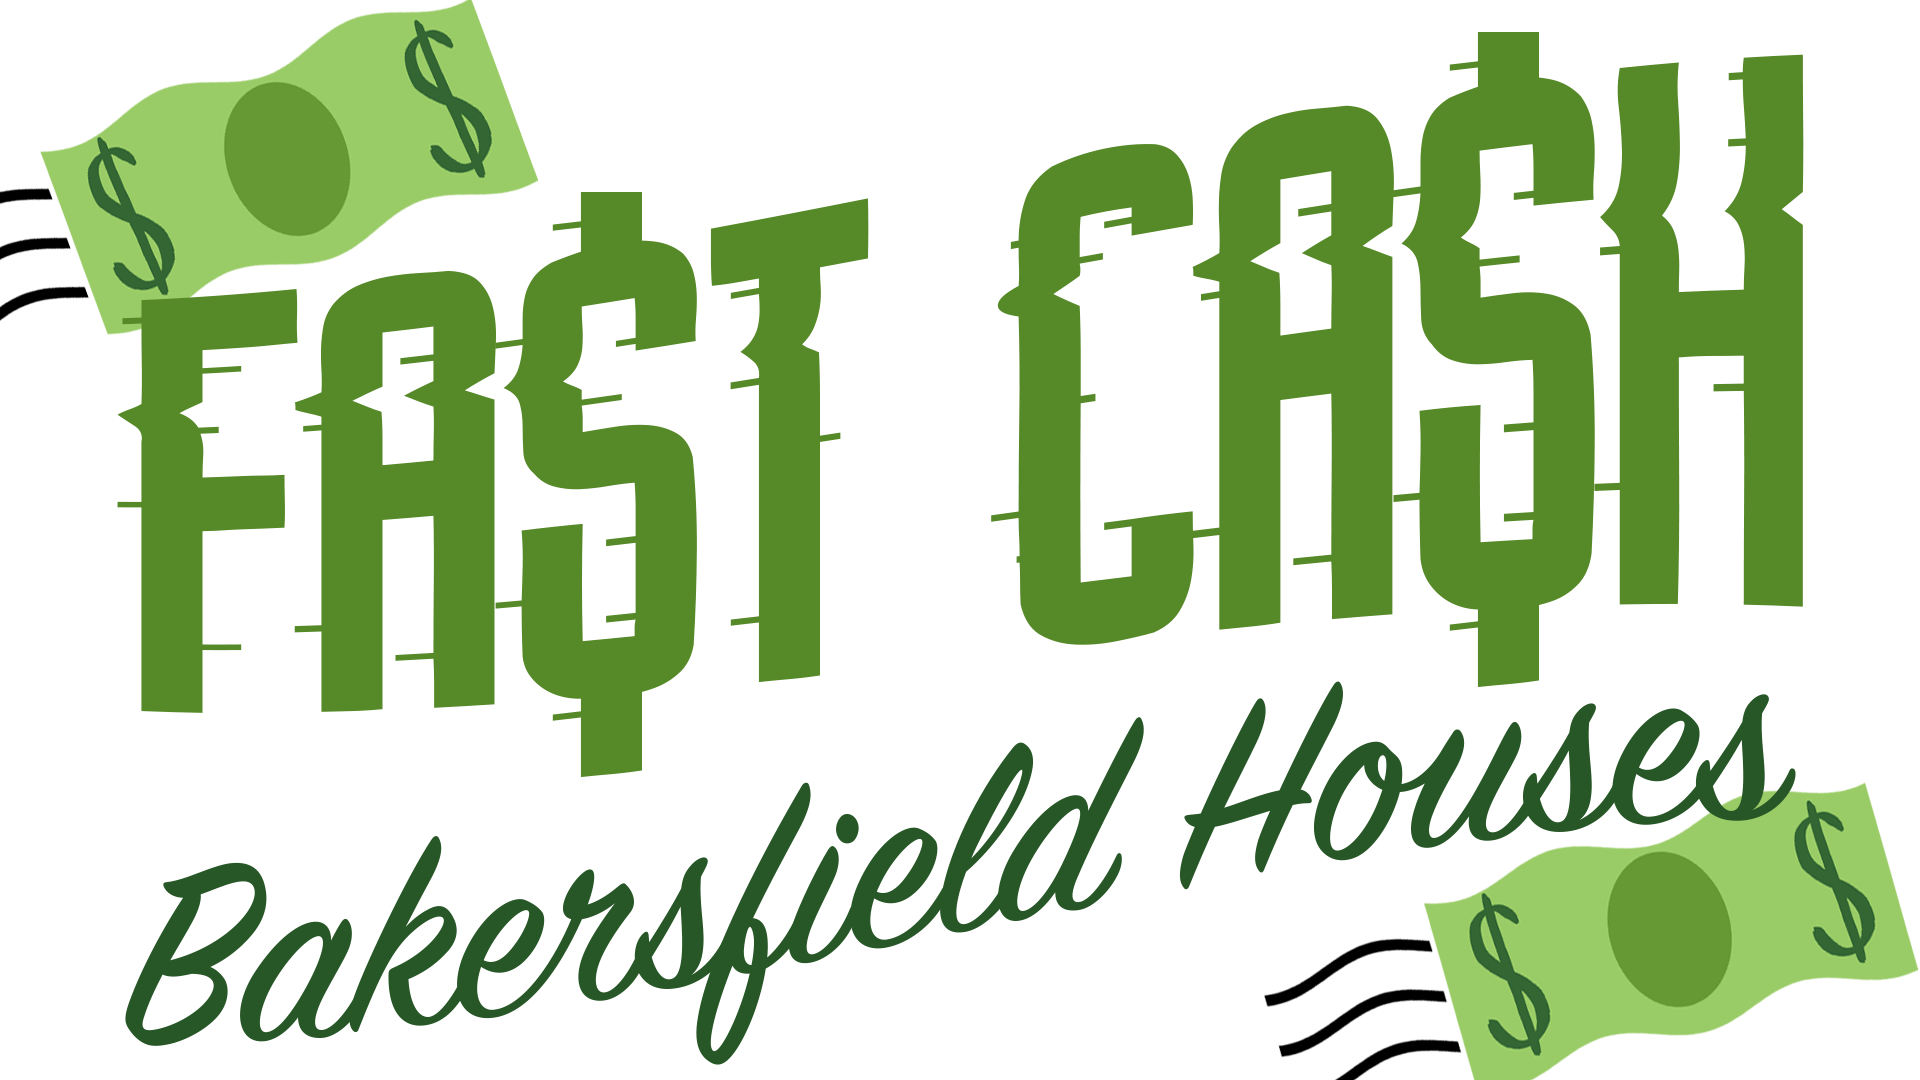 Fast Cash Bakersfield Houses logo